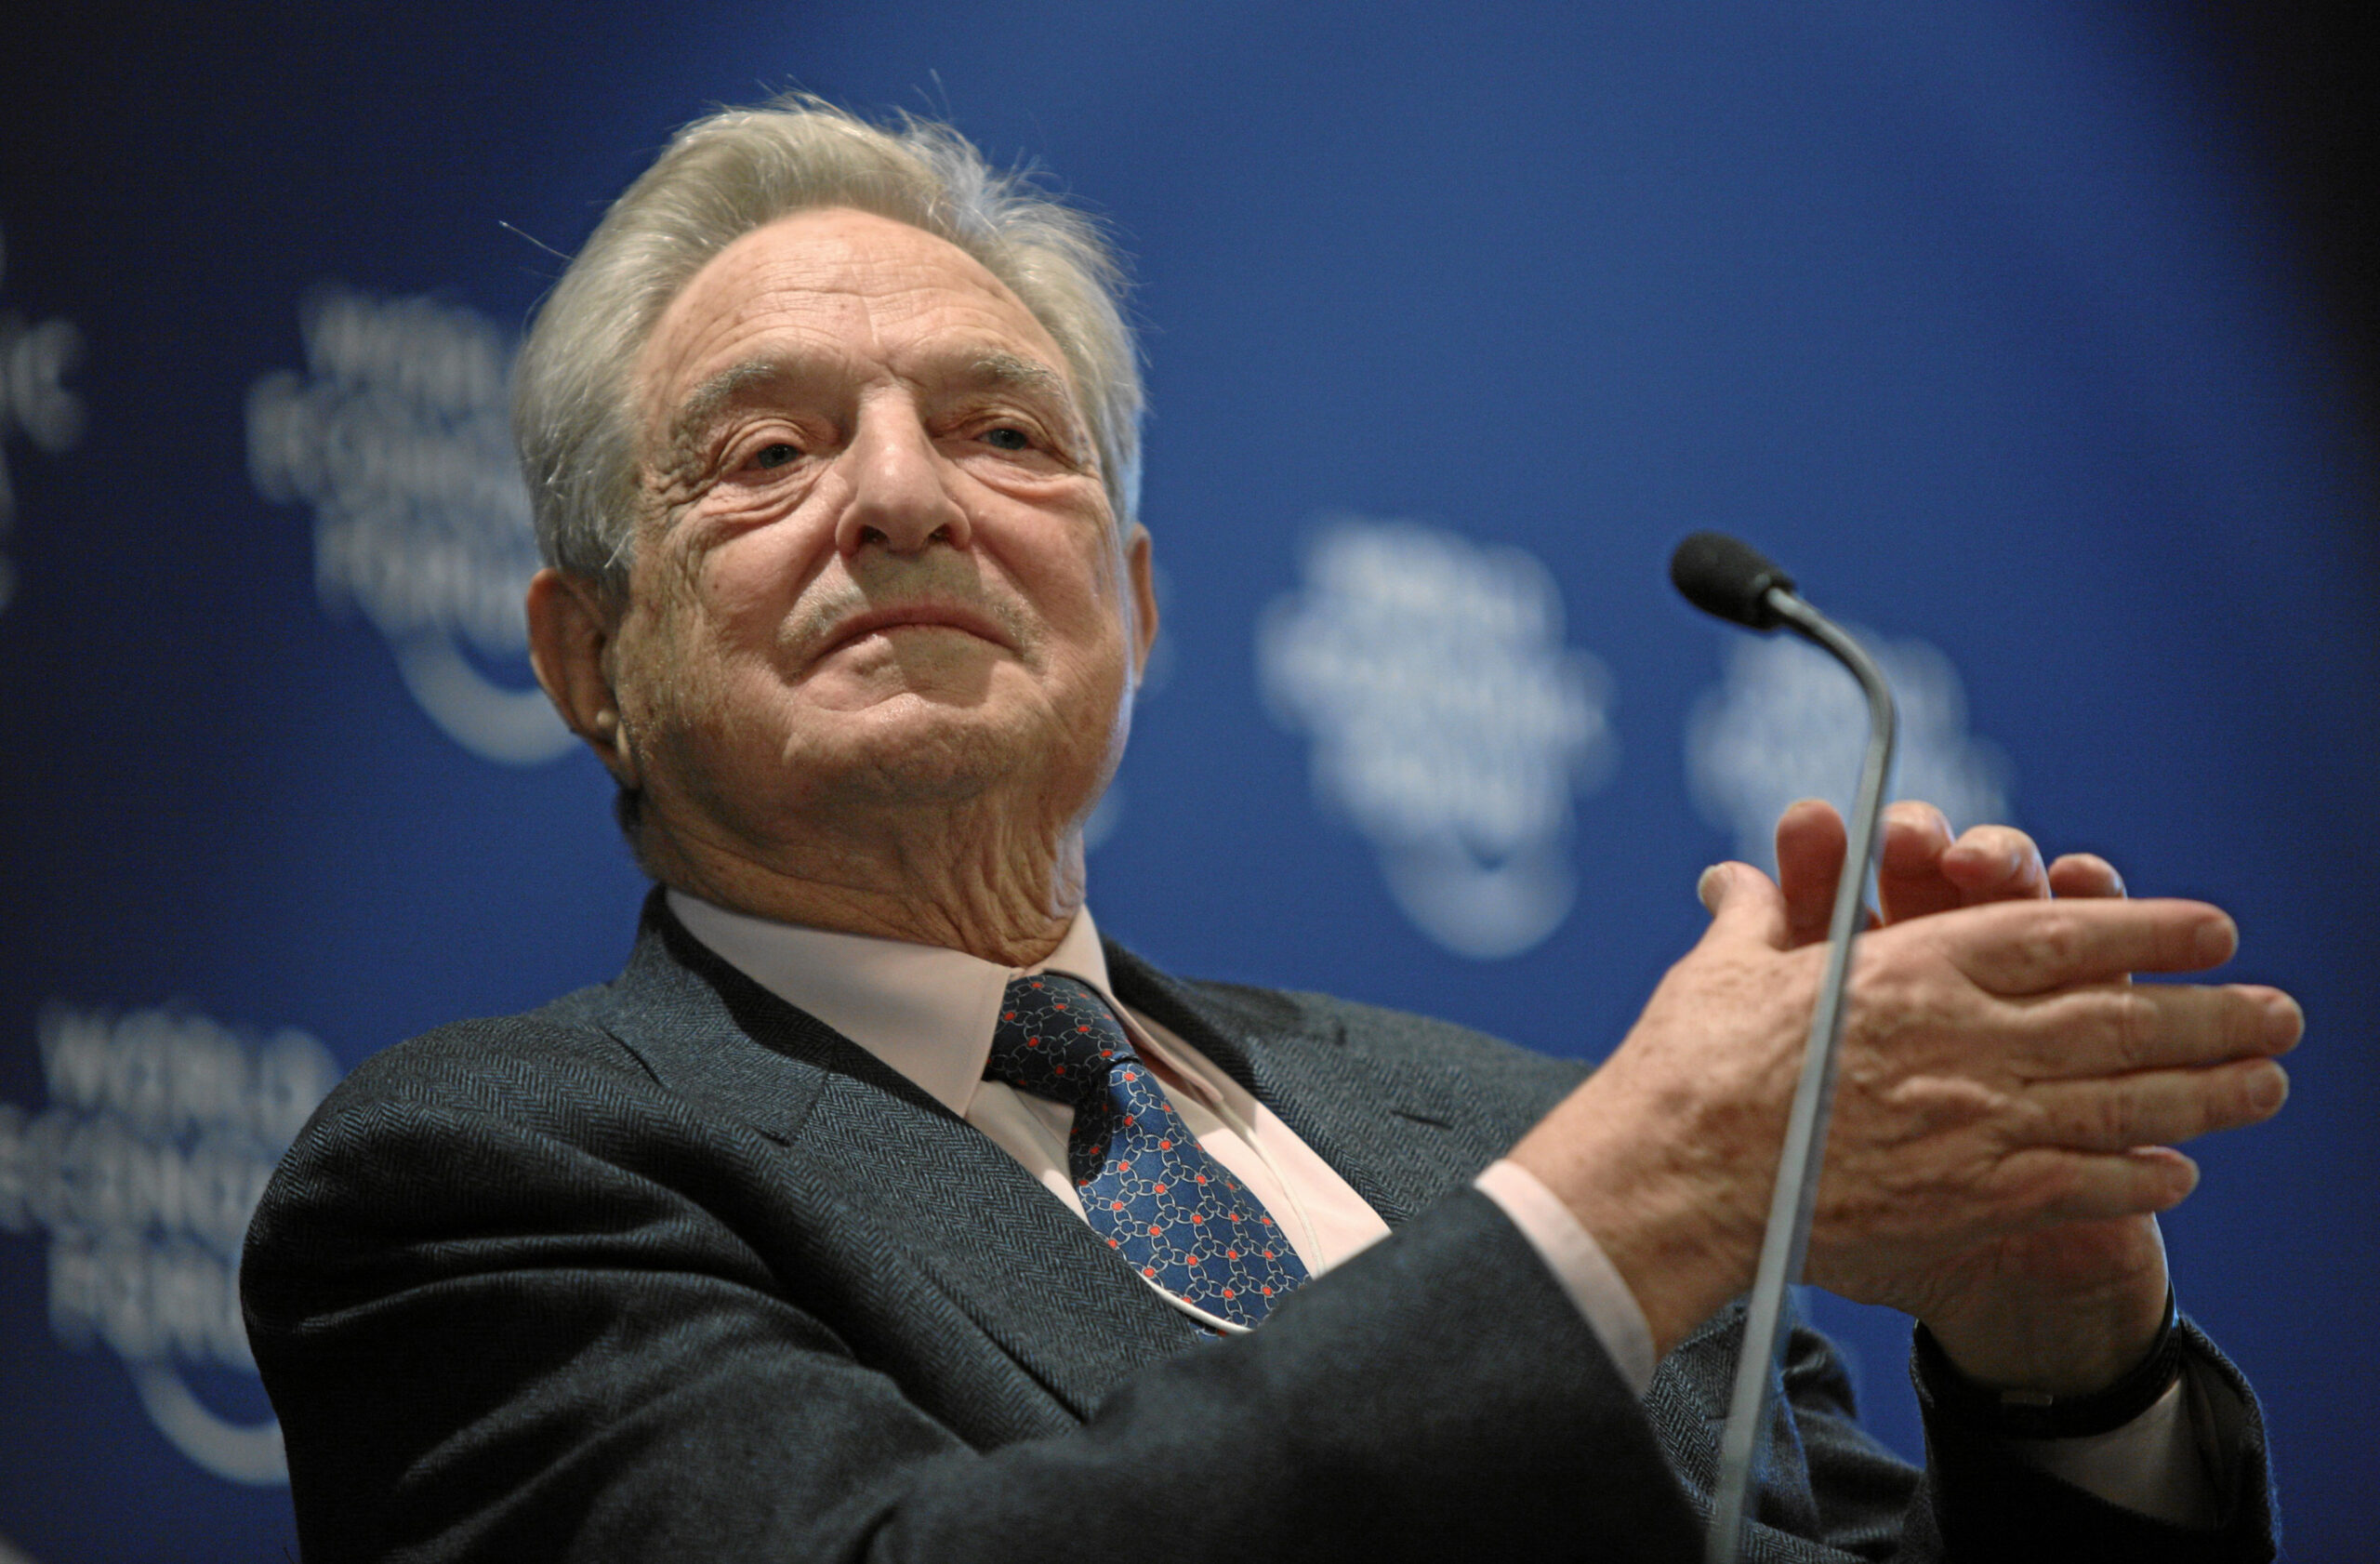 L’Unione europea rischia la dissoluzione. Parola di George Soros